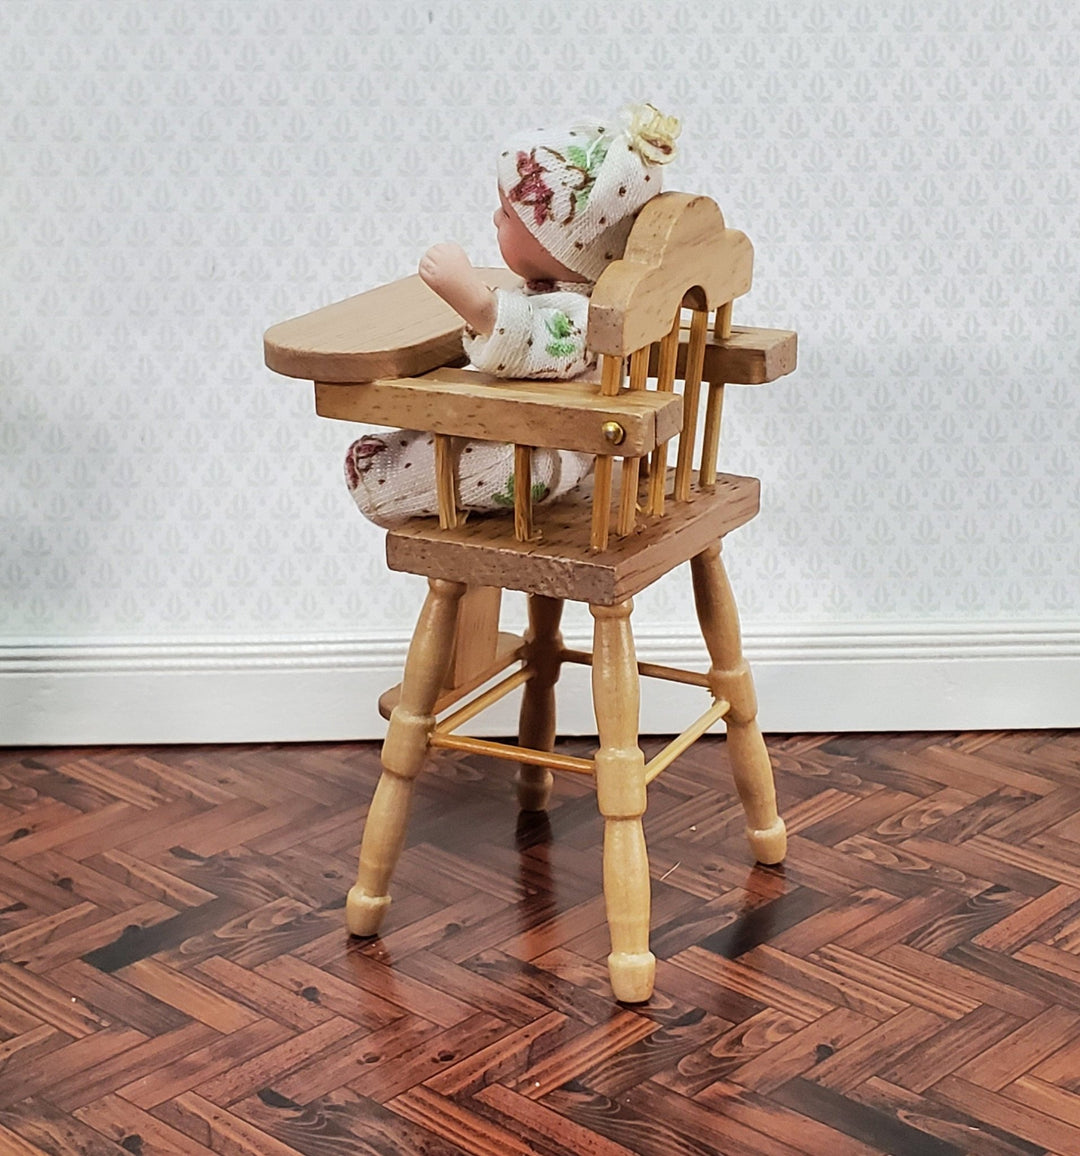 Dollhouse Nursery Room Set Crib High Chair Wardrobe 1:12 Scale Miniatures Light Oak - Miniature Crush